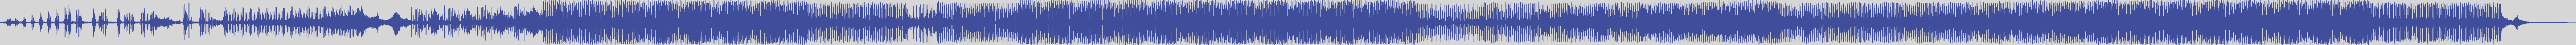 atomic_recordings [AR012] Claudio Fabiani, Daniele Soriani - In My House [D-soriani Bora B Mix] audio wave form